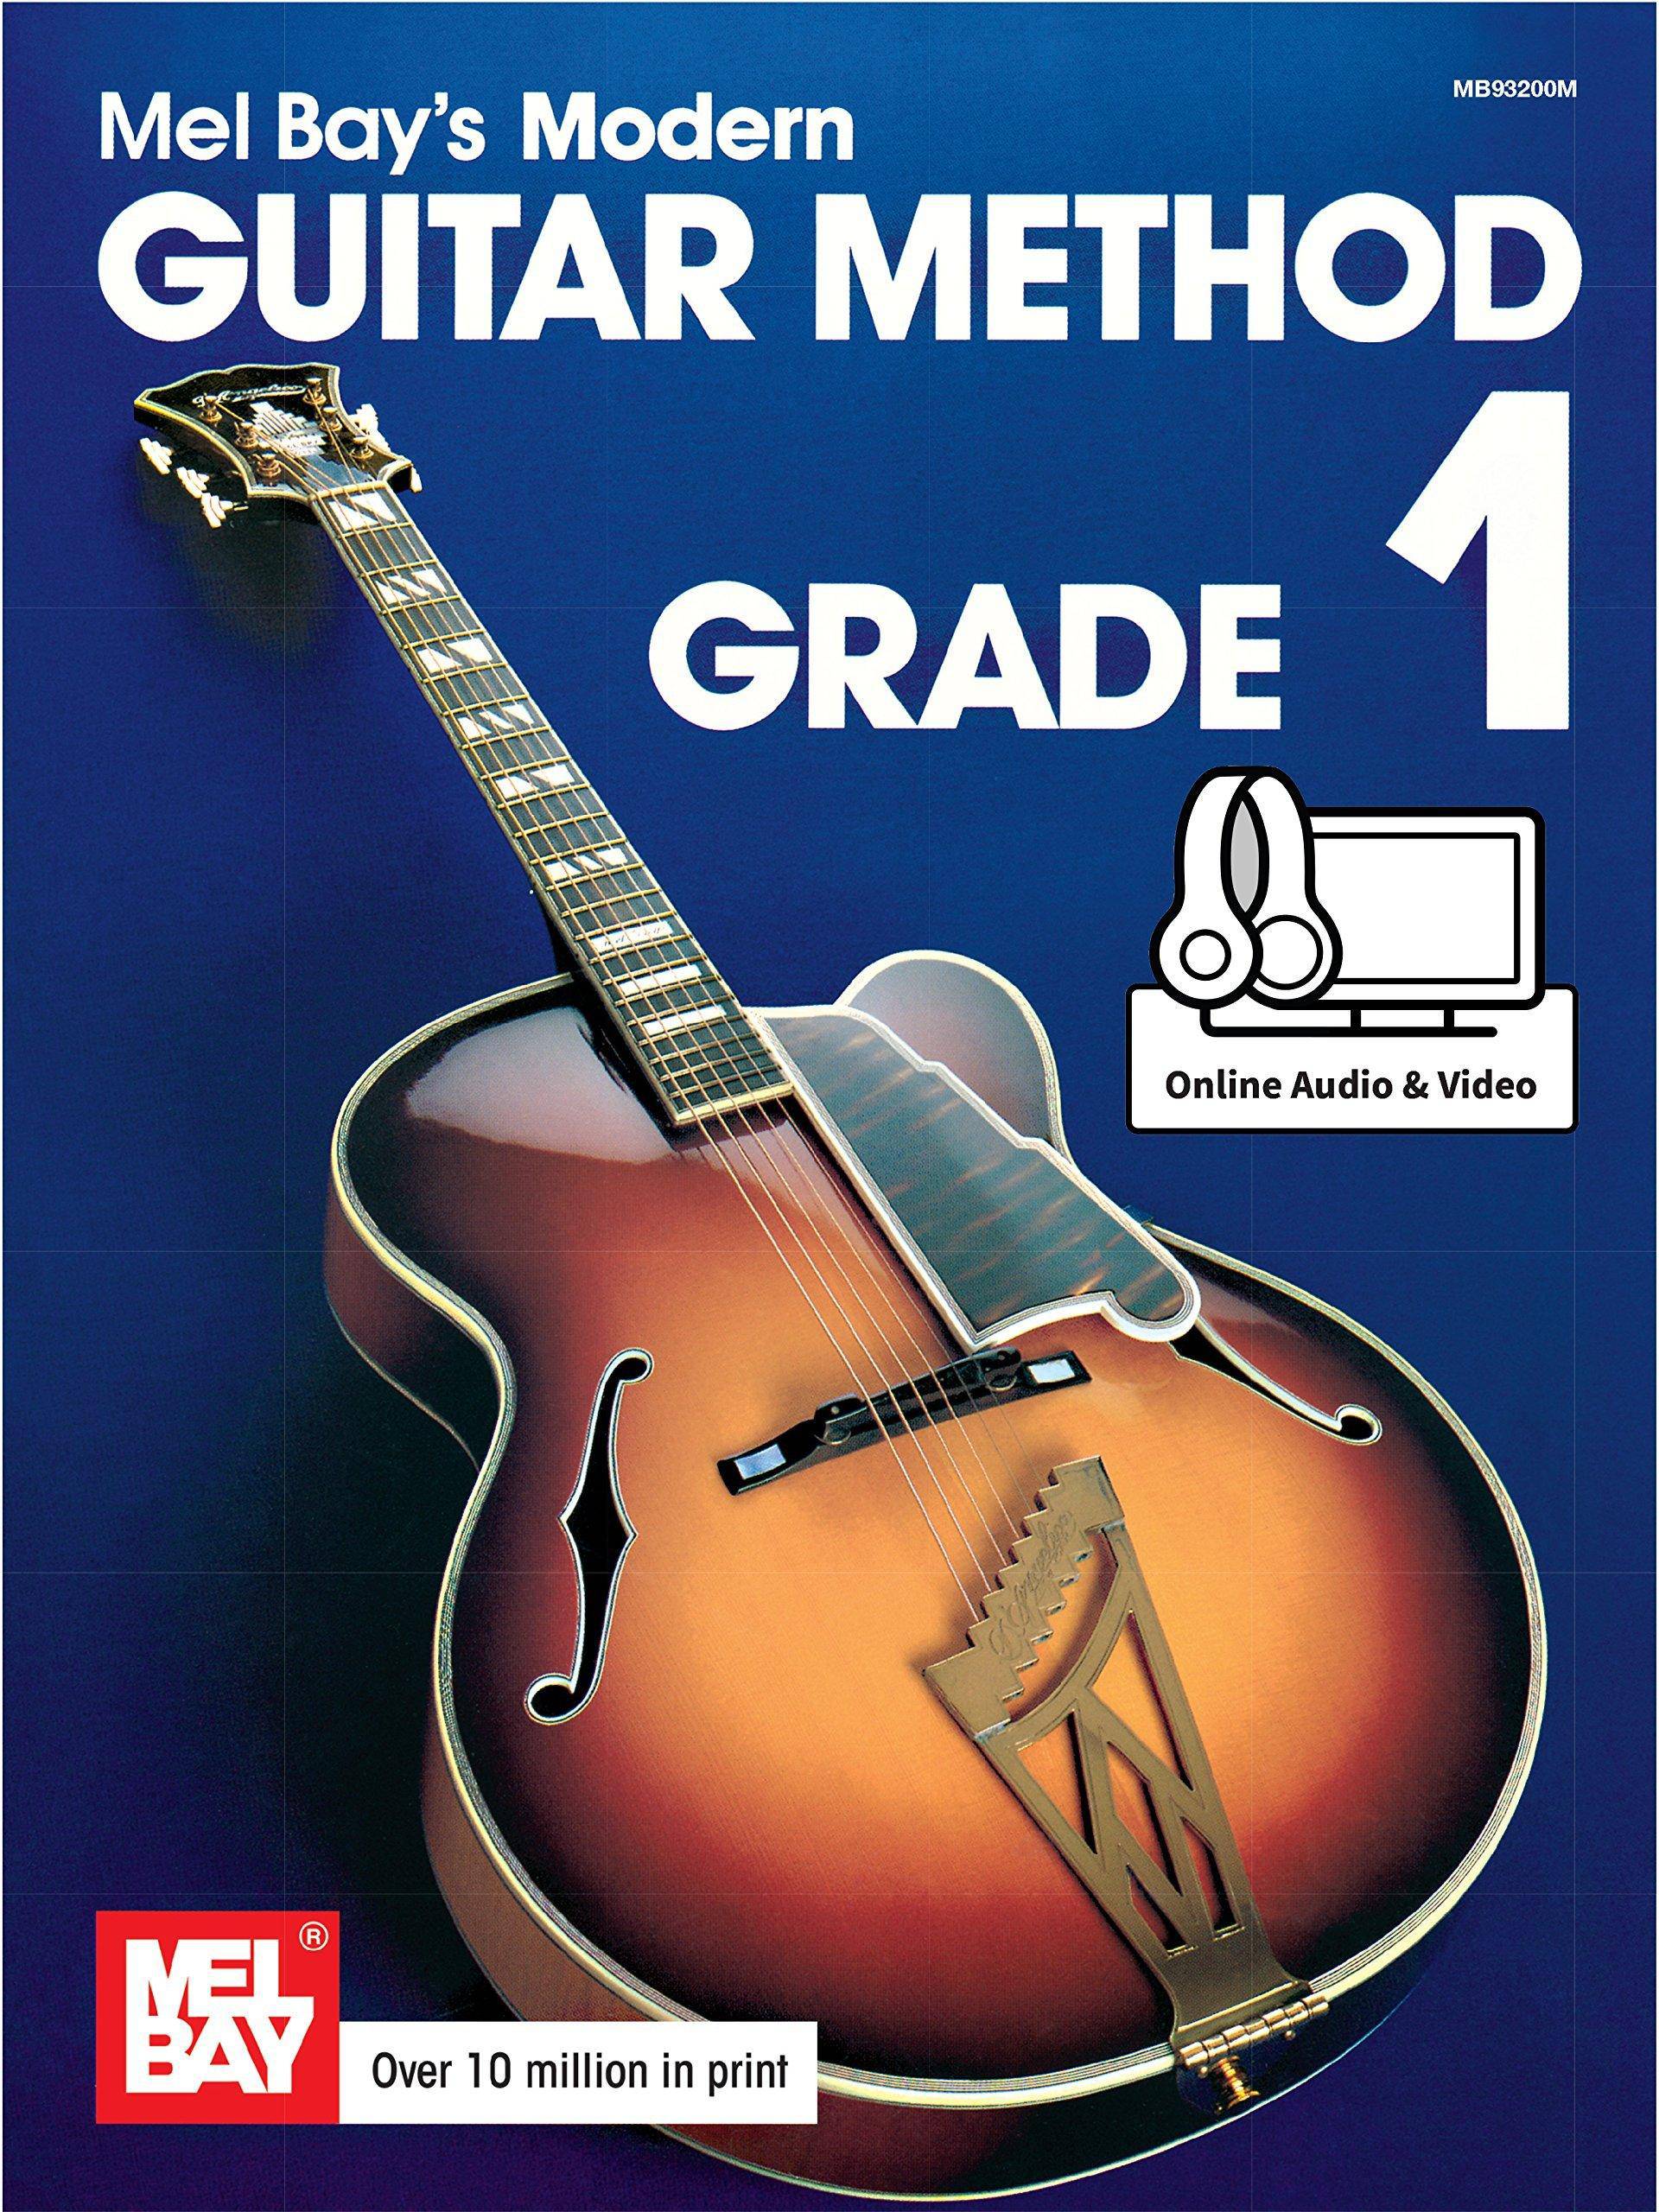 Modern Guitar Method Grade 1 - SureShot Books Publishing LLC